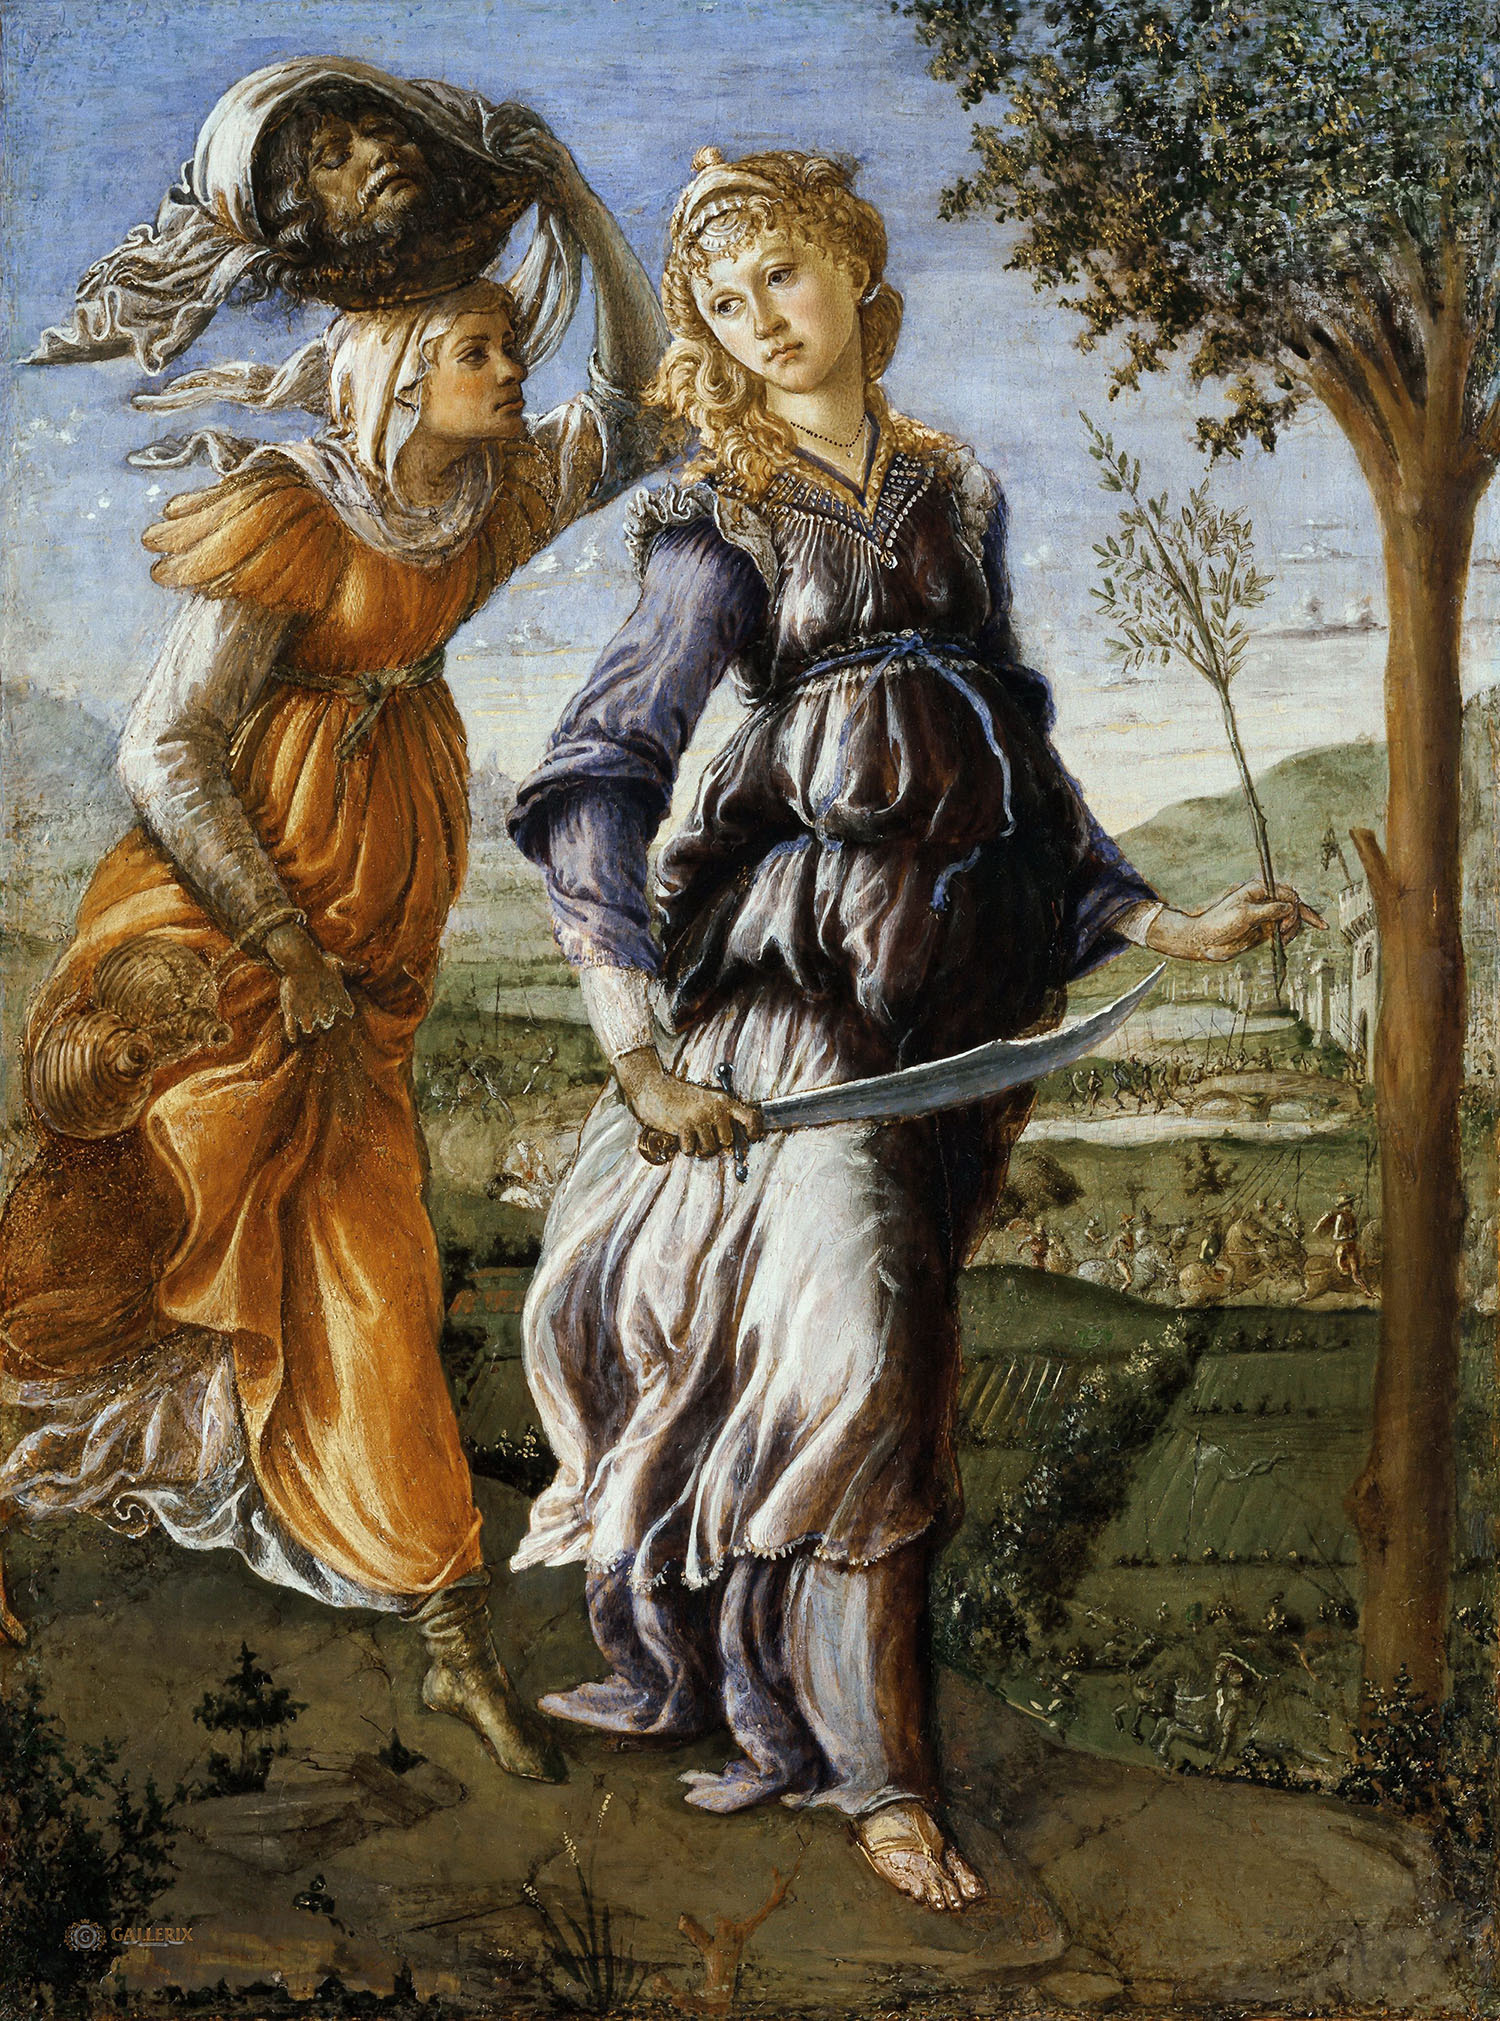 Сандро Боттичелли. "Возвращение Юдифи". 1470-1472. Галерея Уффици, Флоренция".